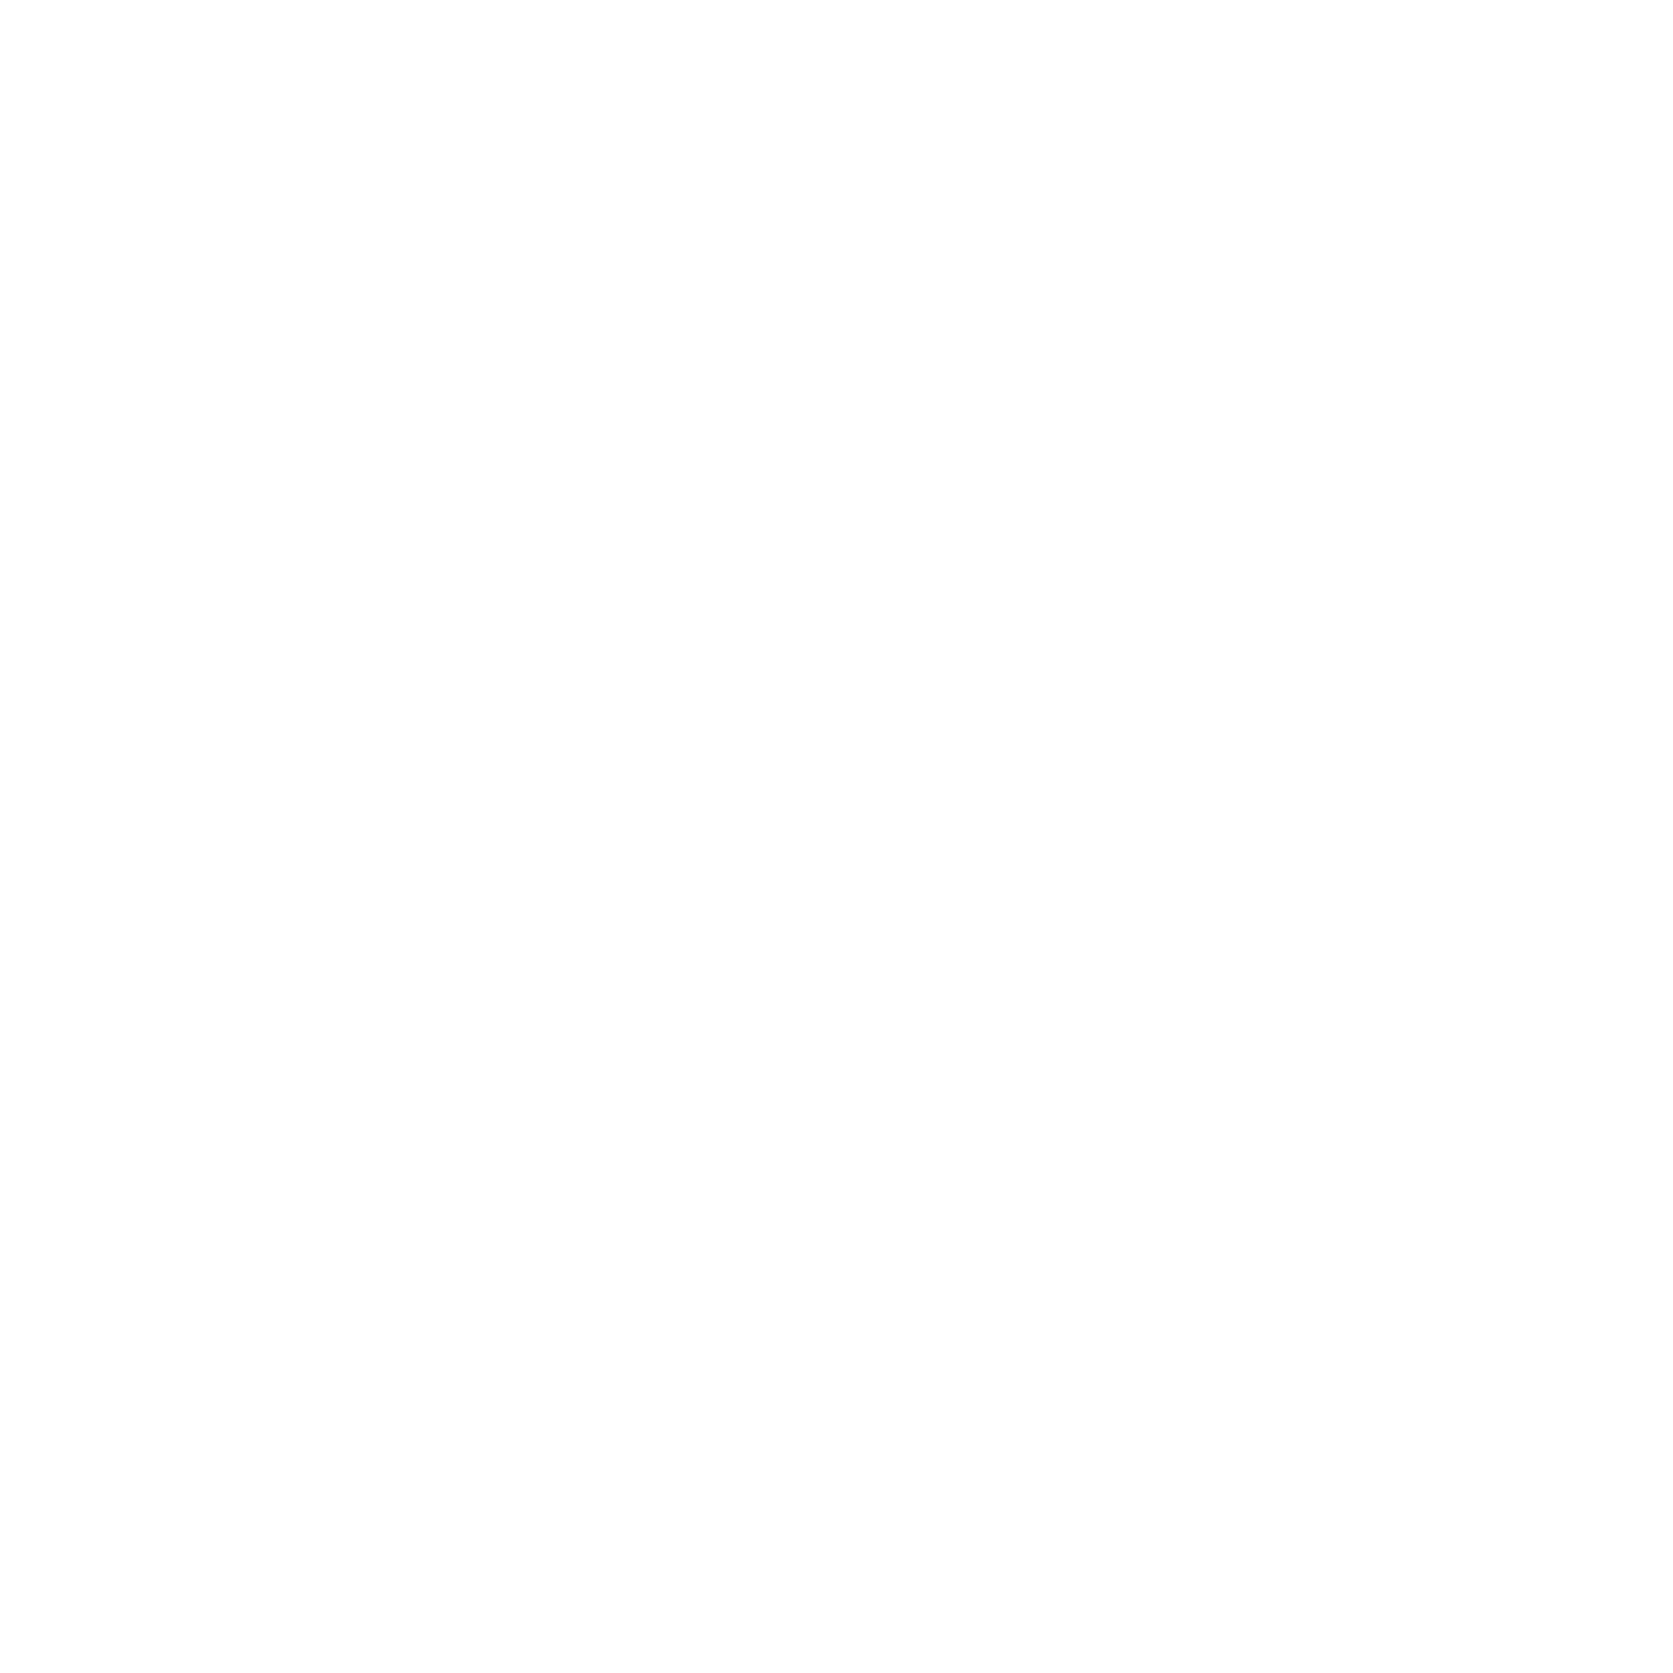 GE-by-Biofy_Logo horizontal NEGATIVO 1 Transparente